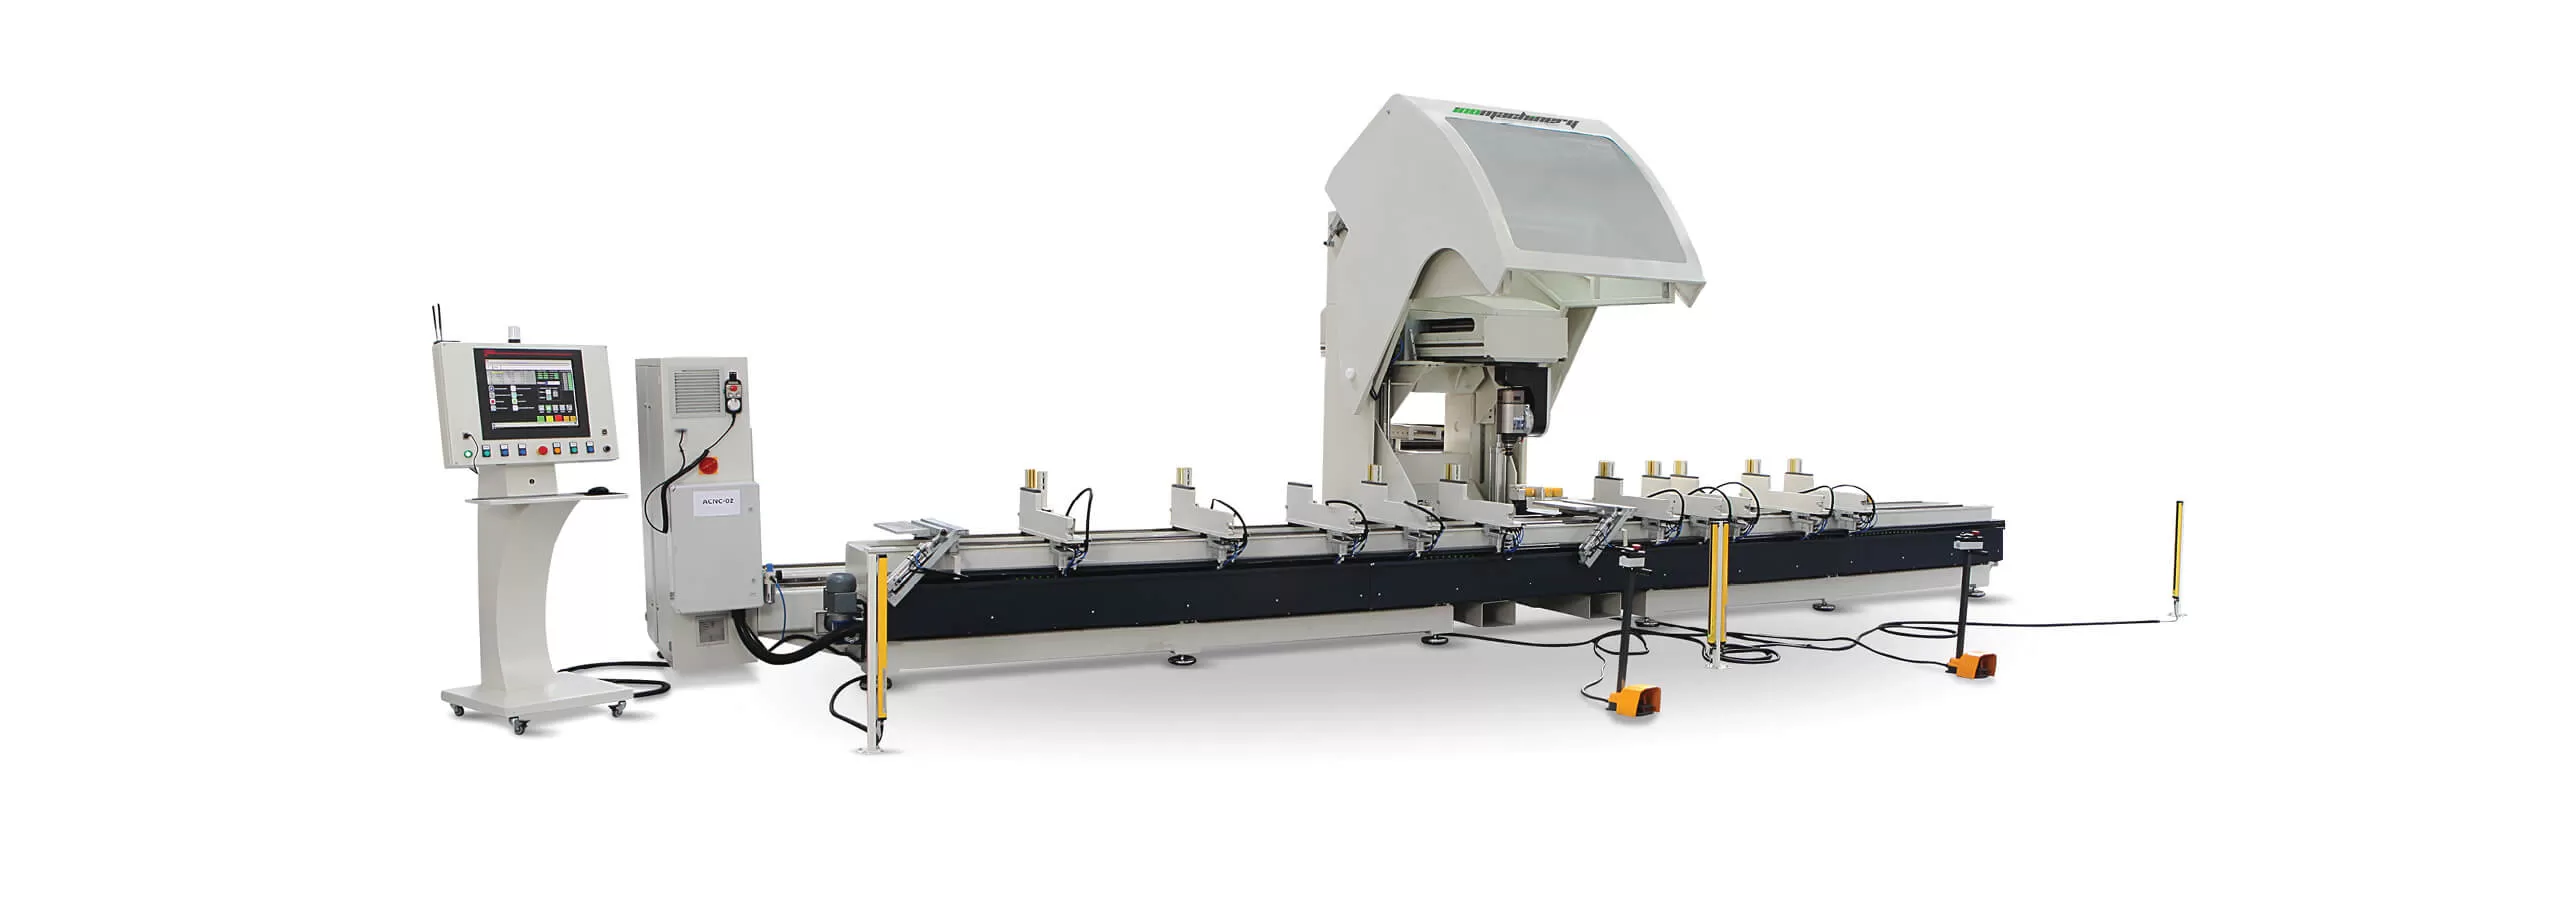 INO XP 9000 CNC Profile Machining Center